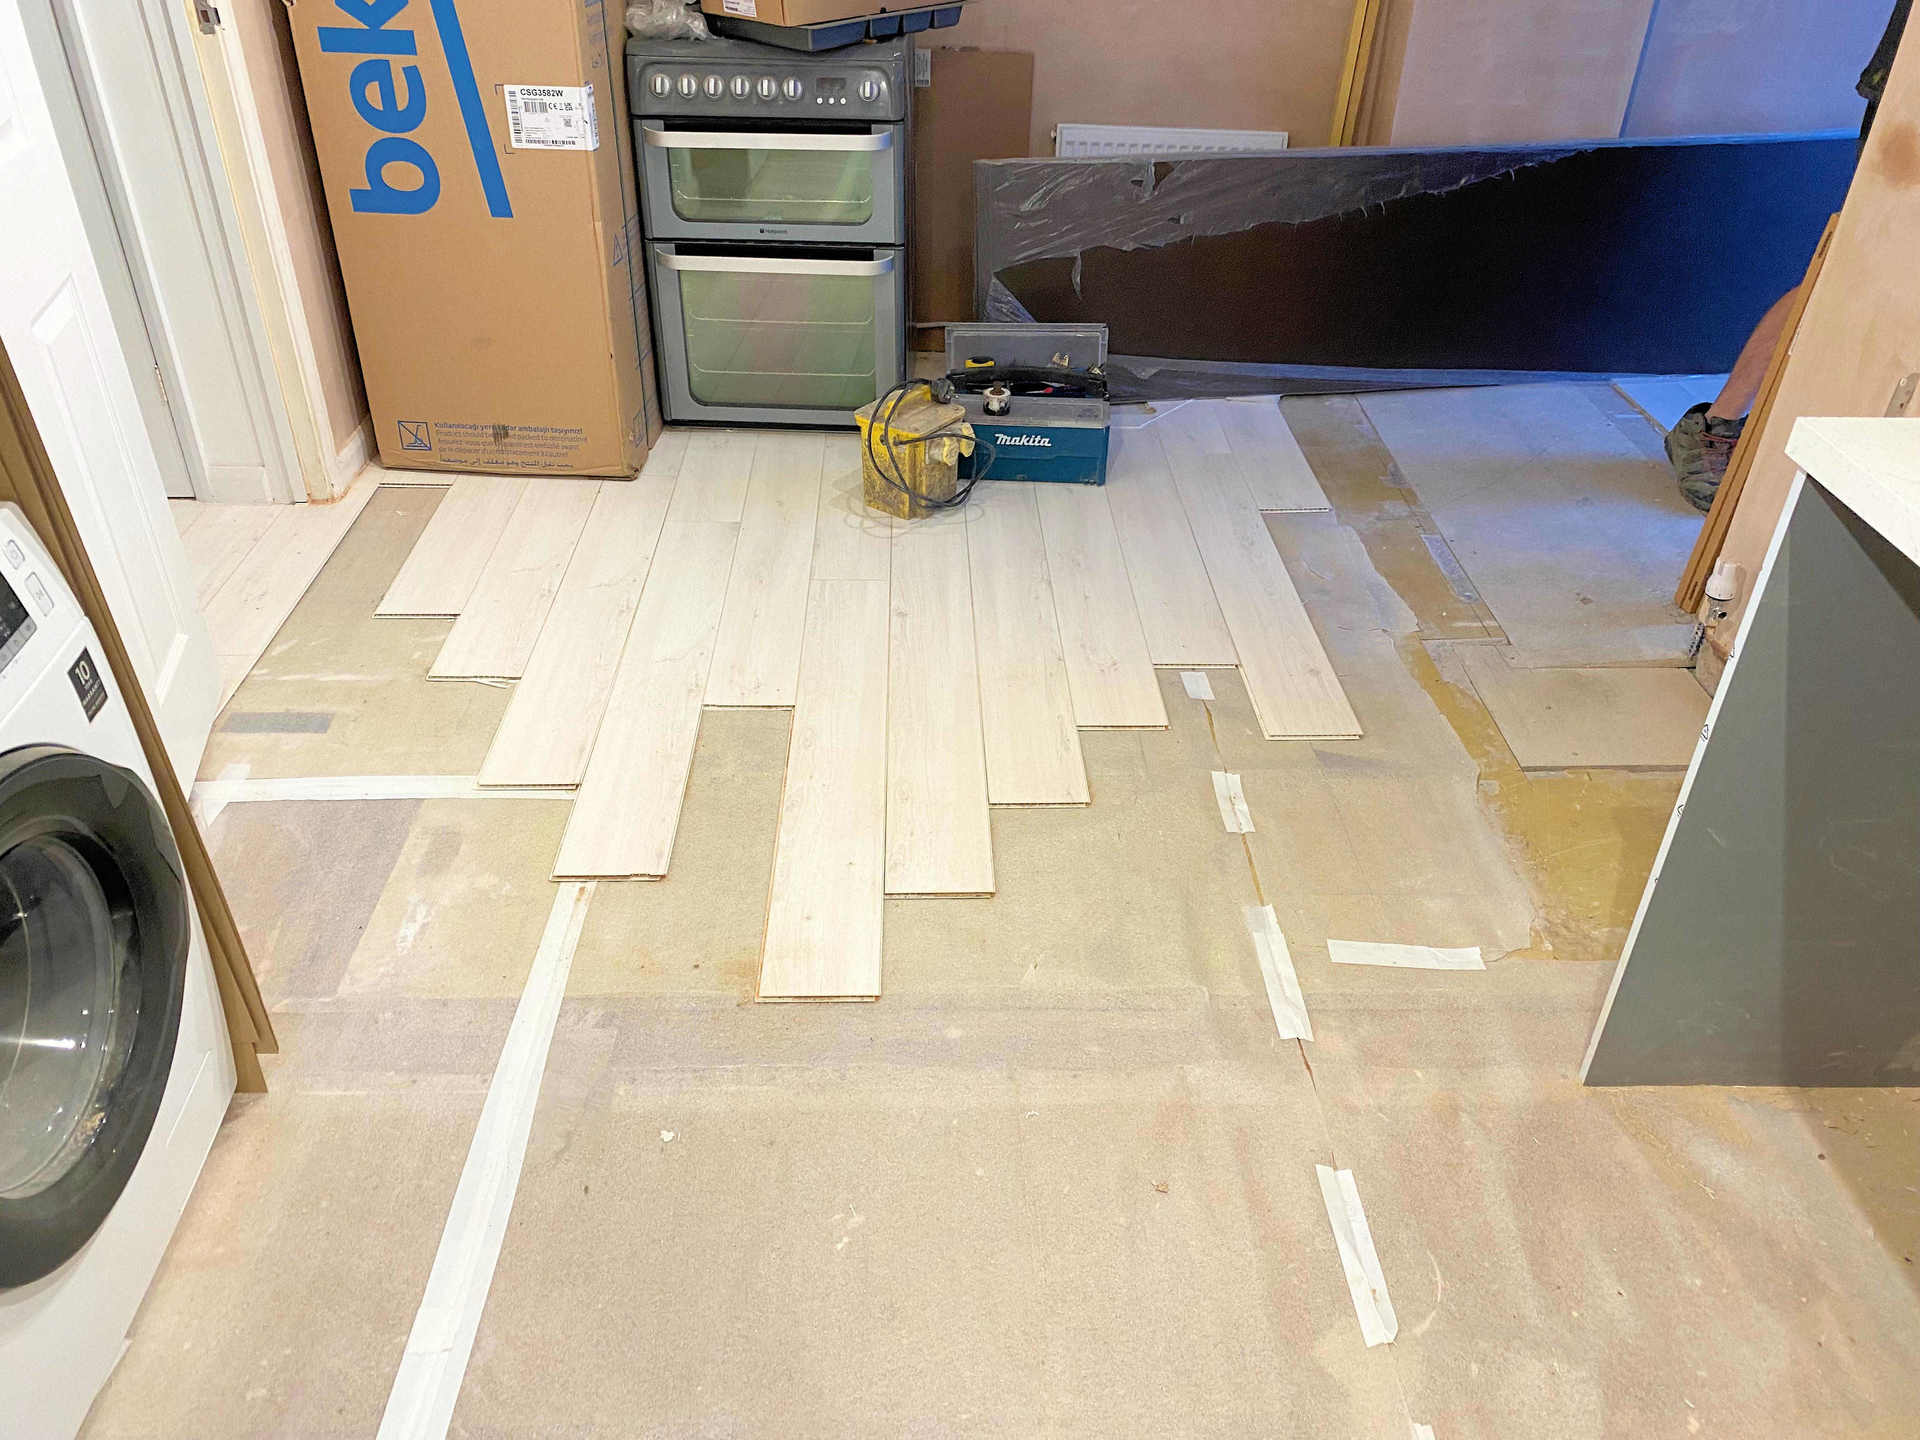 Domestic Remodel and New Kitchen Barnstaple North Devon using Luxury Vinyl Flooring (LVT) “Vinyl Click Flooring”